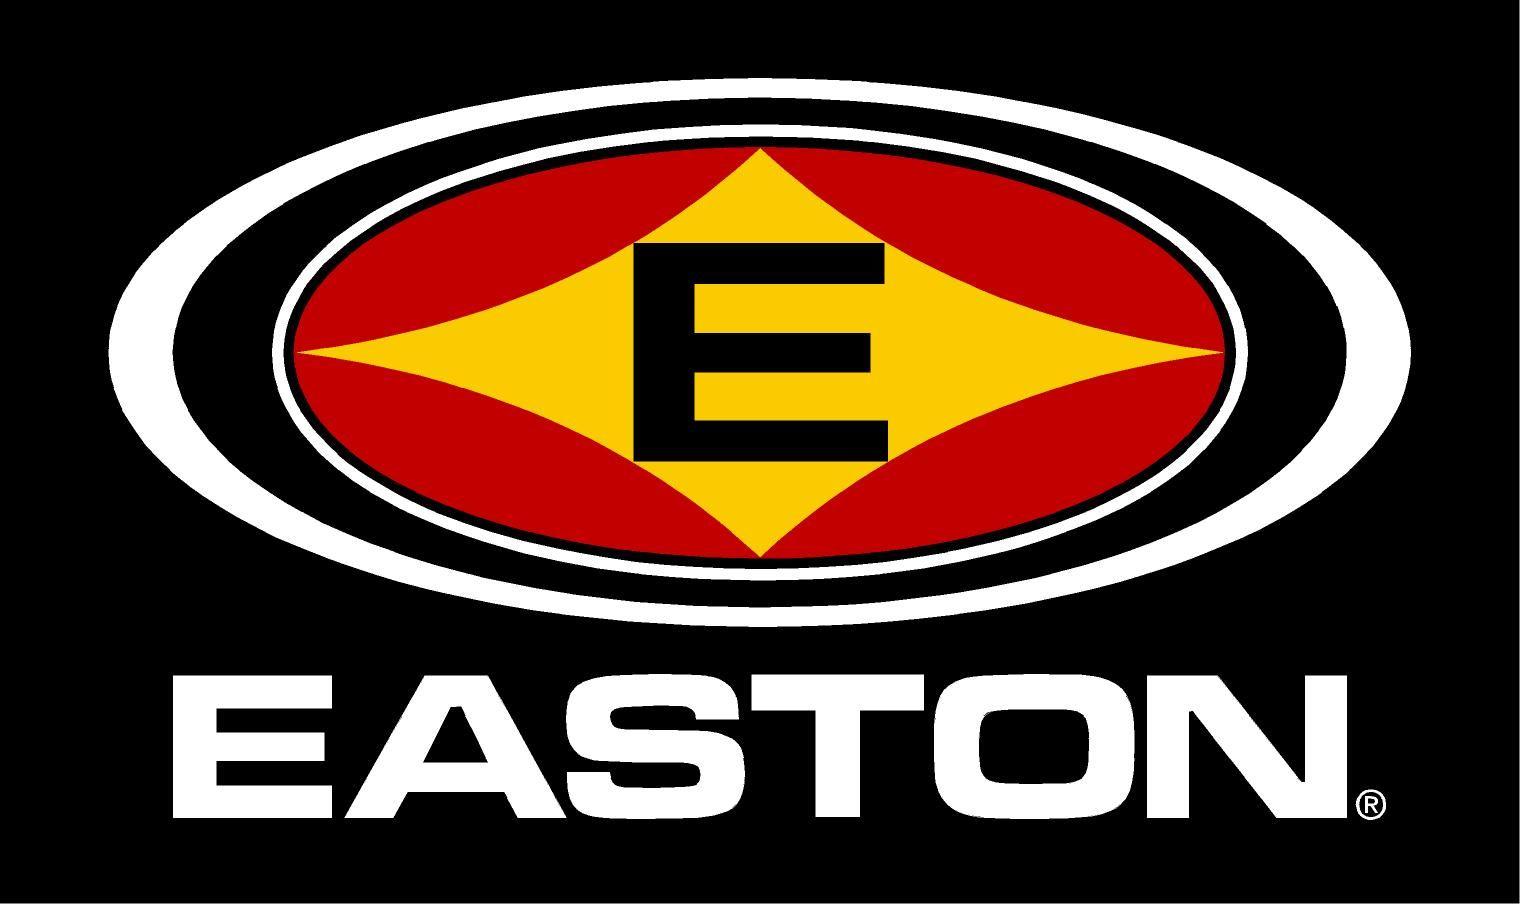 Easton Softball Logo - Easton Softball Bats: The details you need to make the right choice.